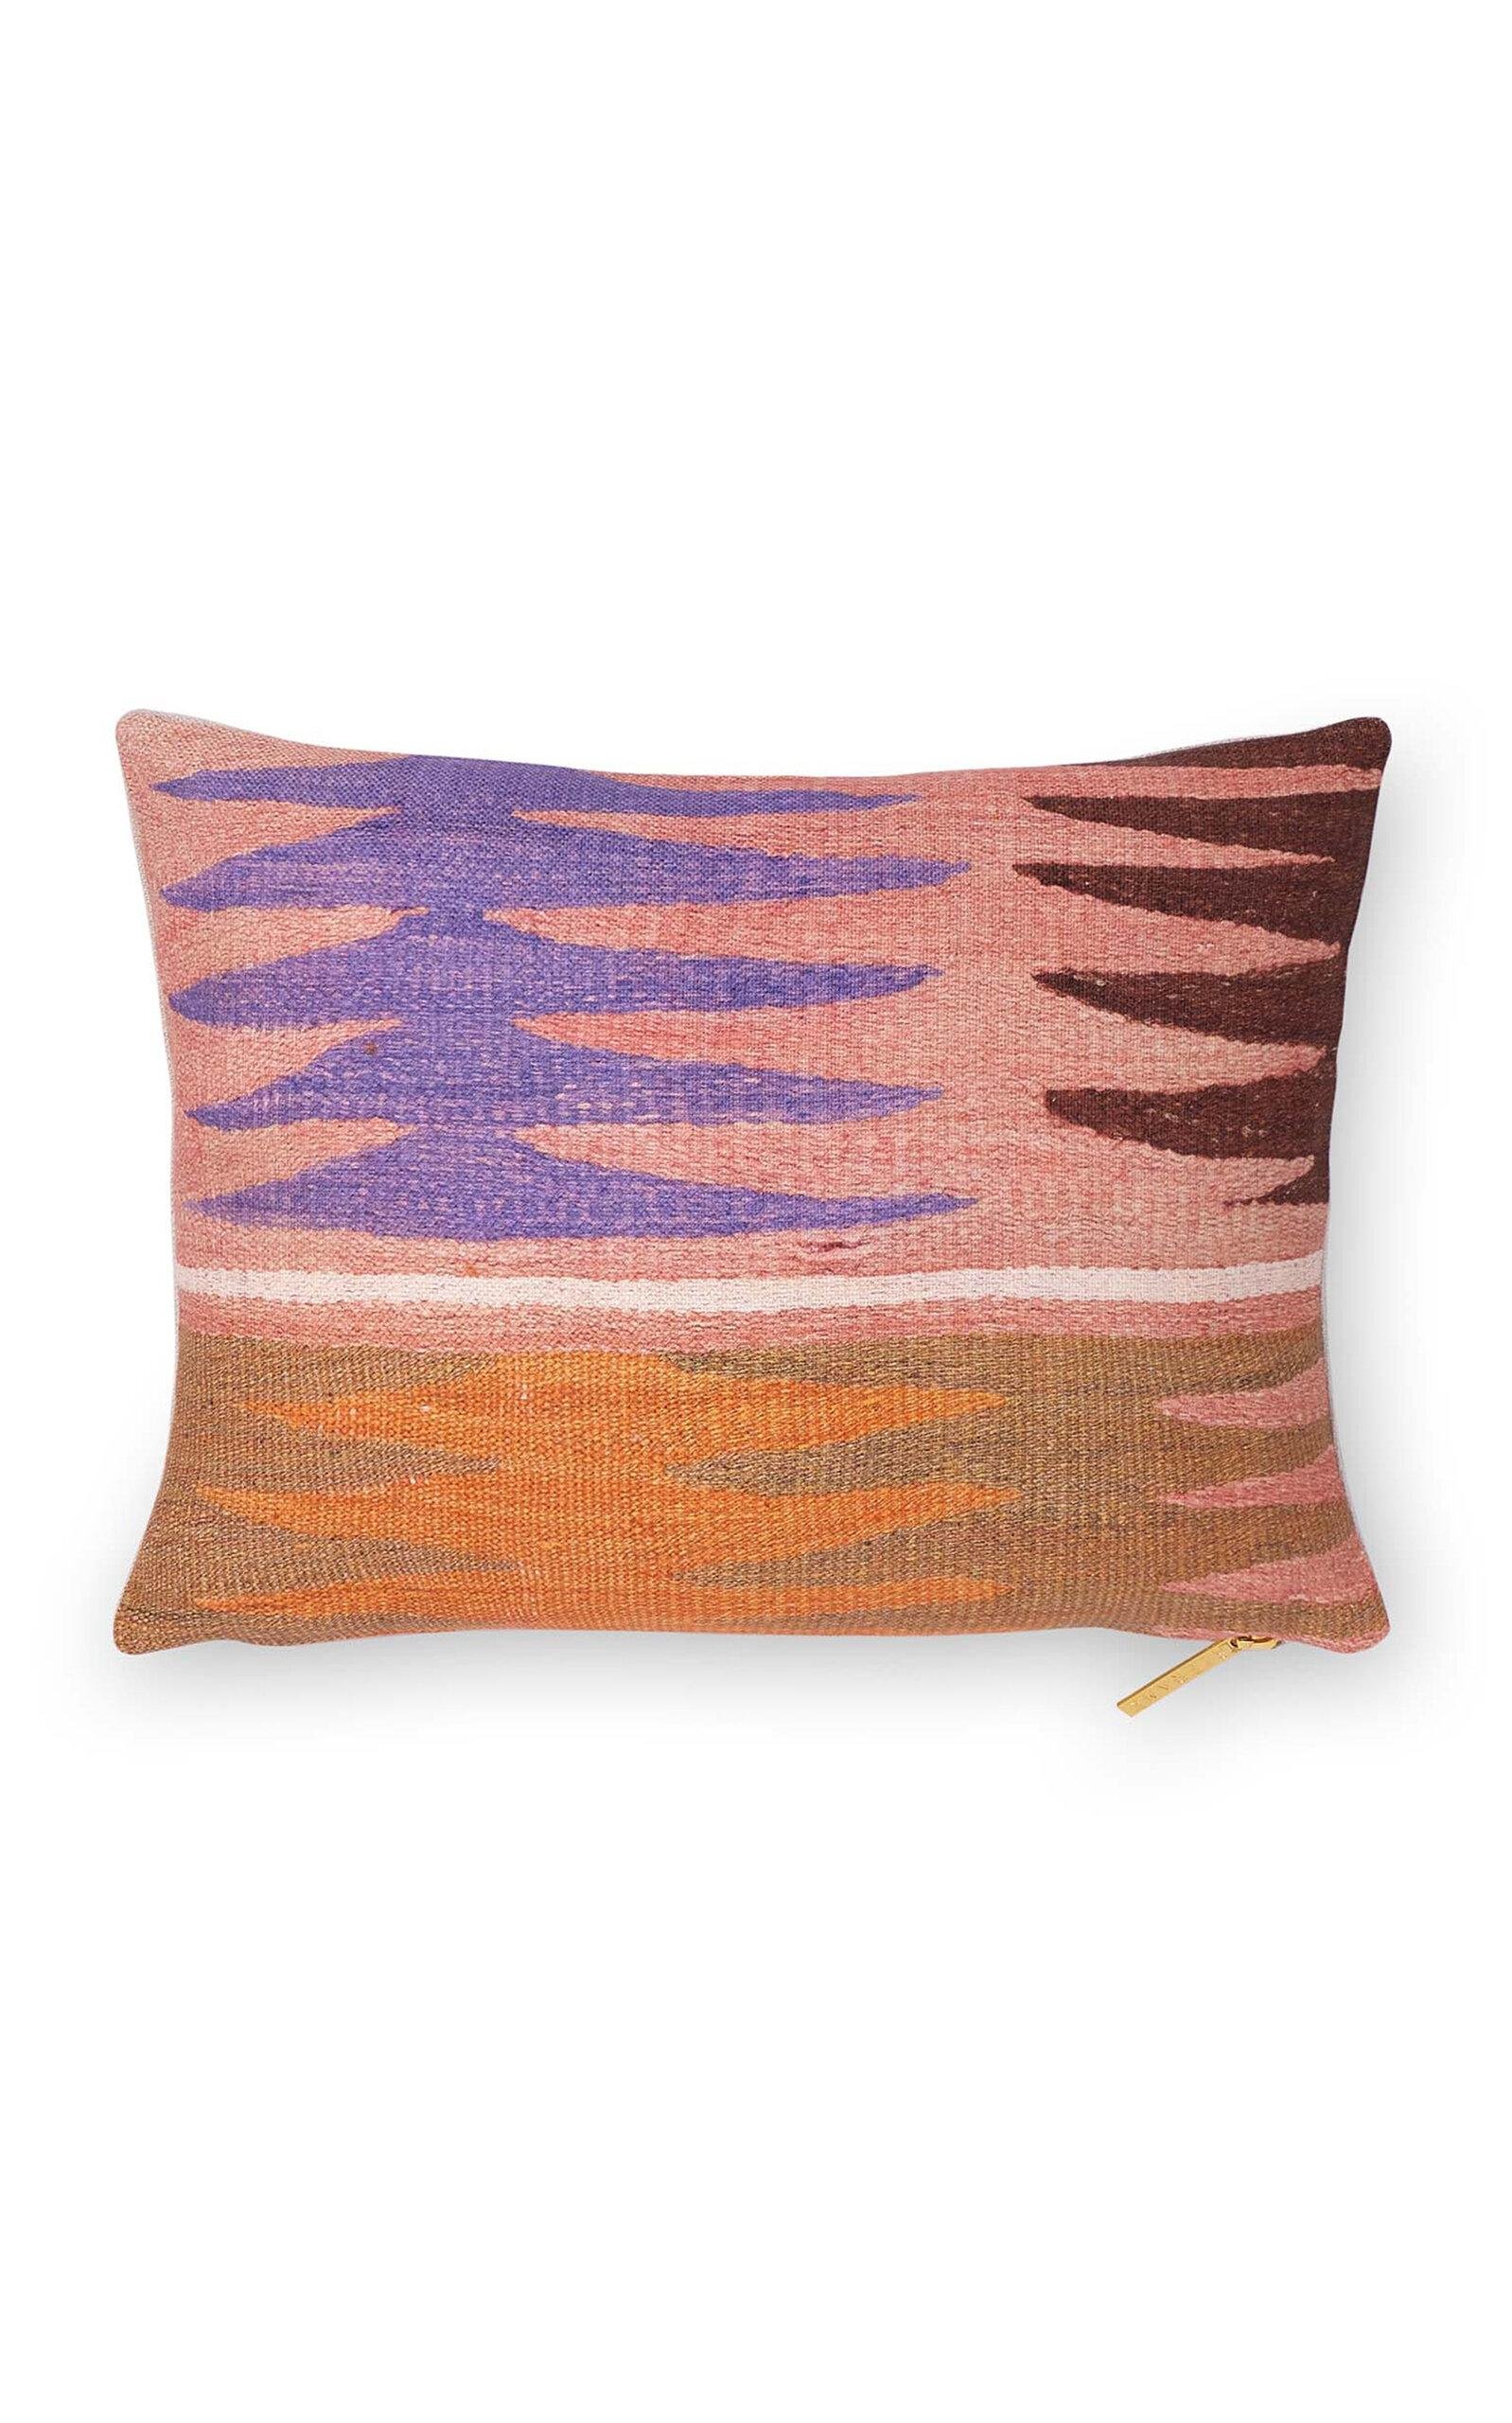 St. Frank - Kilim Shell Feathers Linen-Cotton Pillow - Multi - Moda Operandi by ST. FRANK